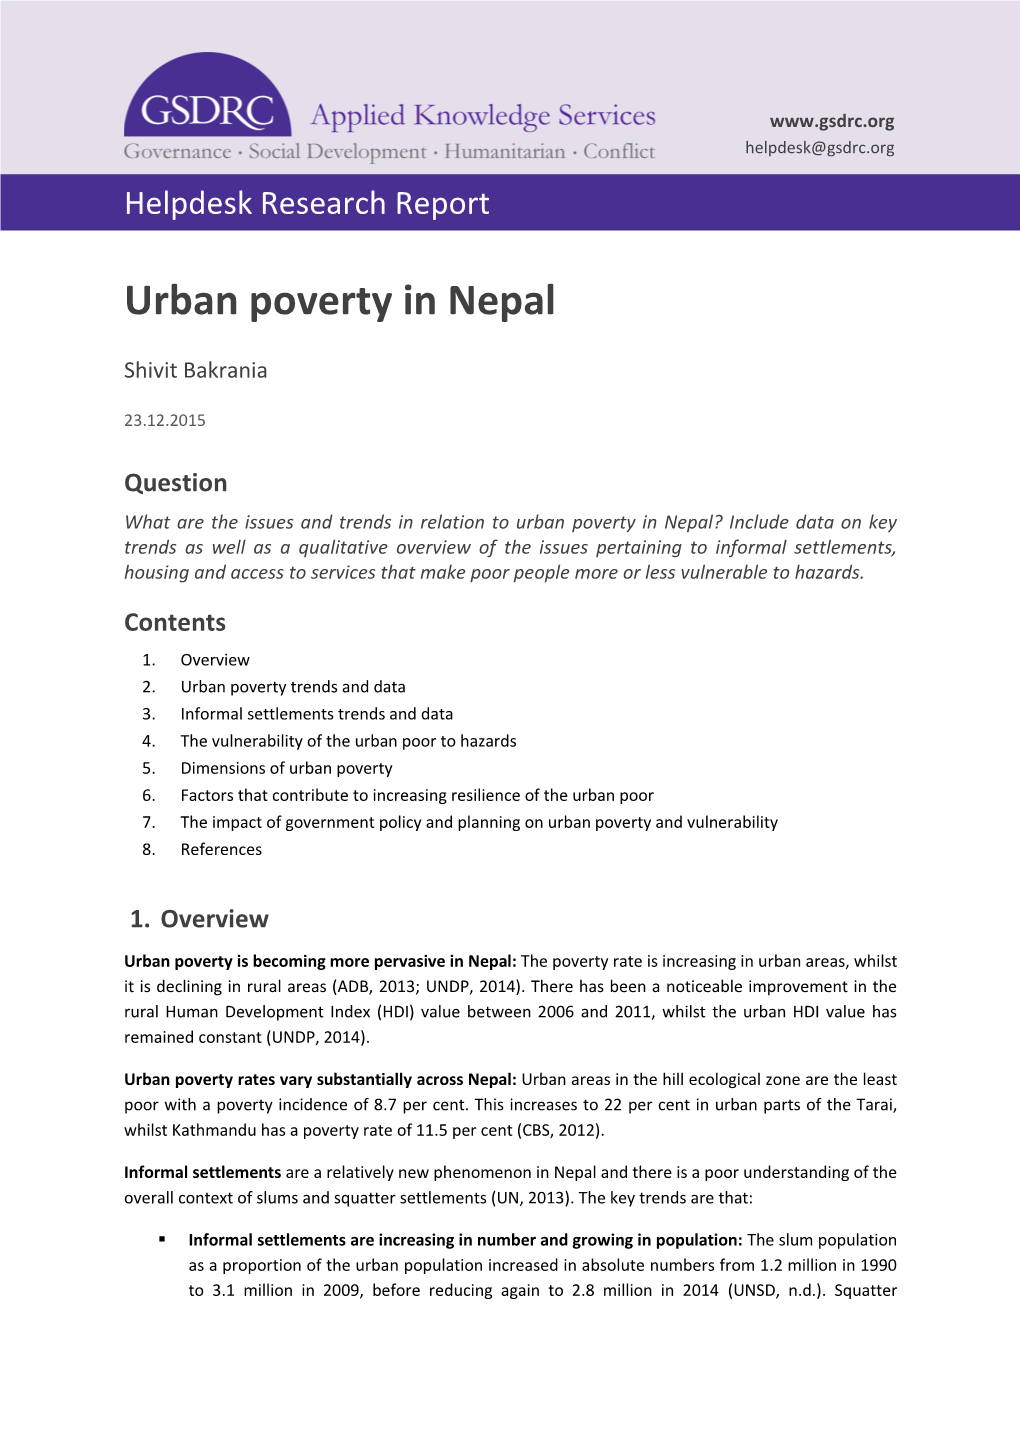 Urban Poverty in Nepal